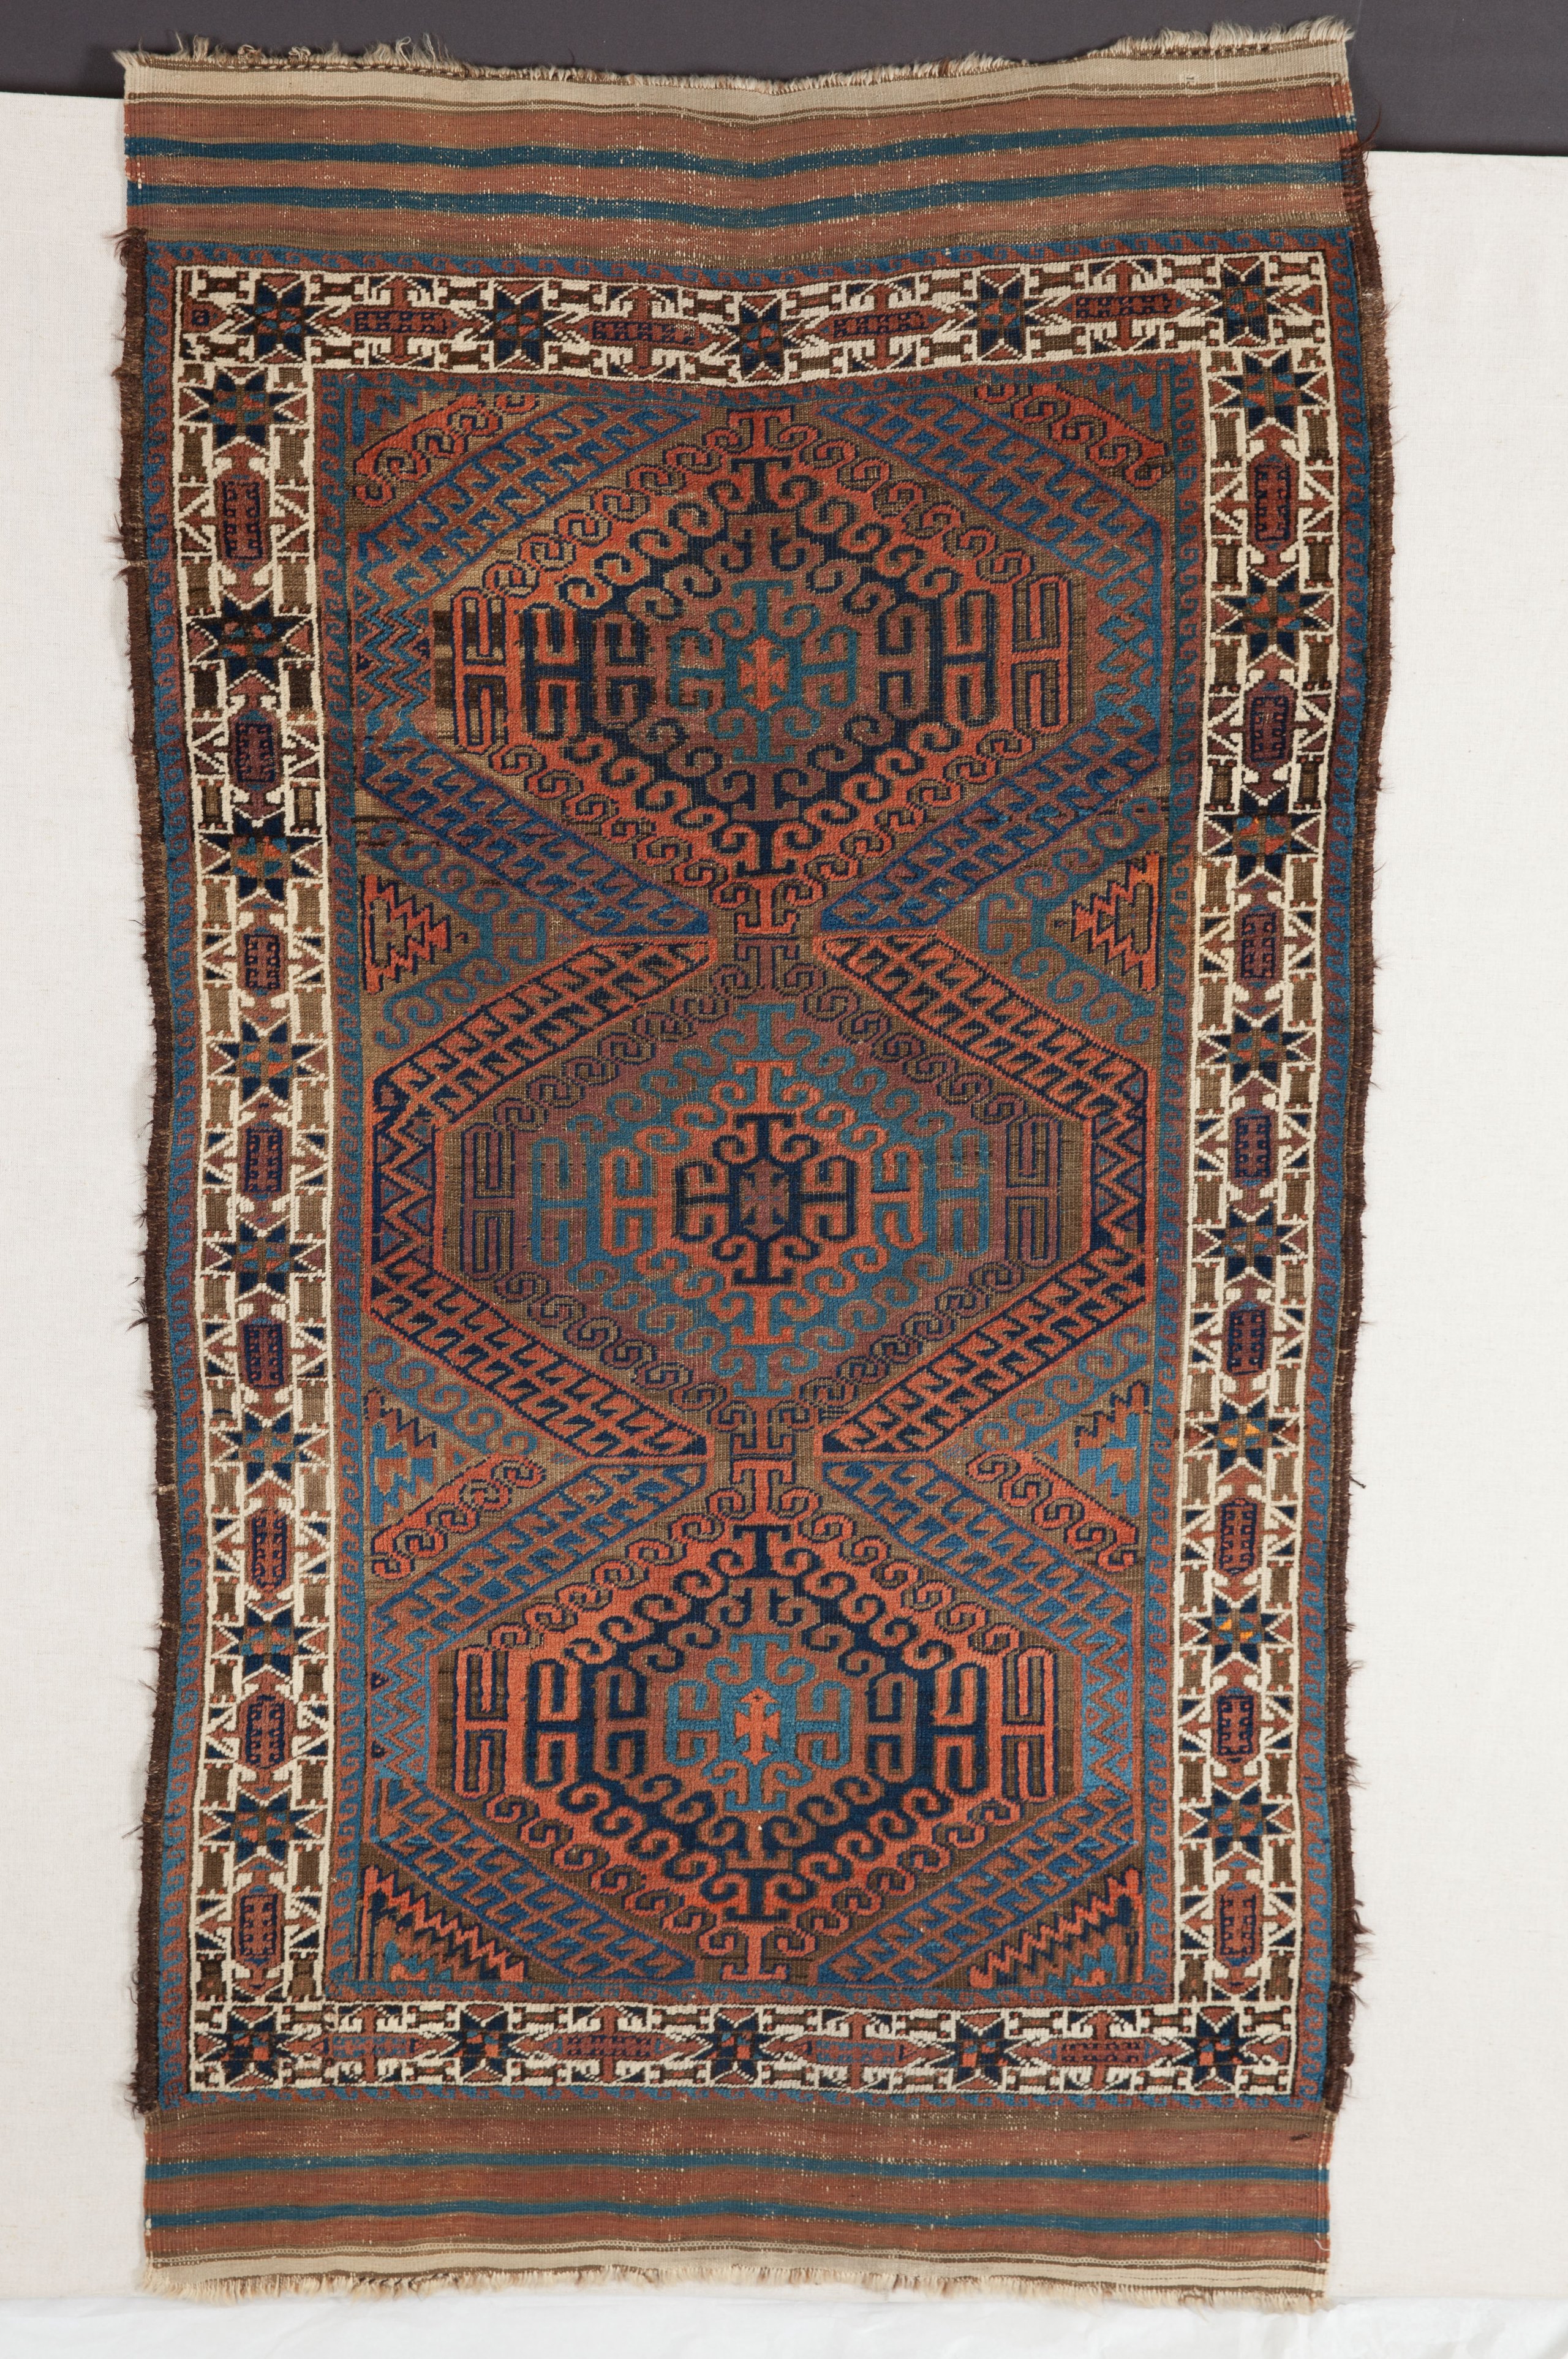 Powerhouse Collection - Mashwani design rug, western Afghanistan